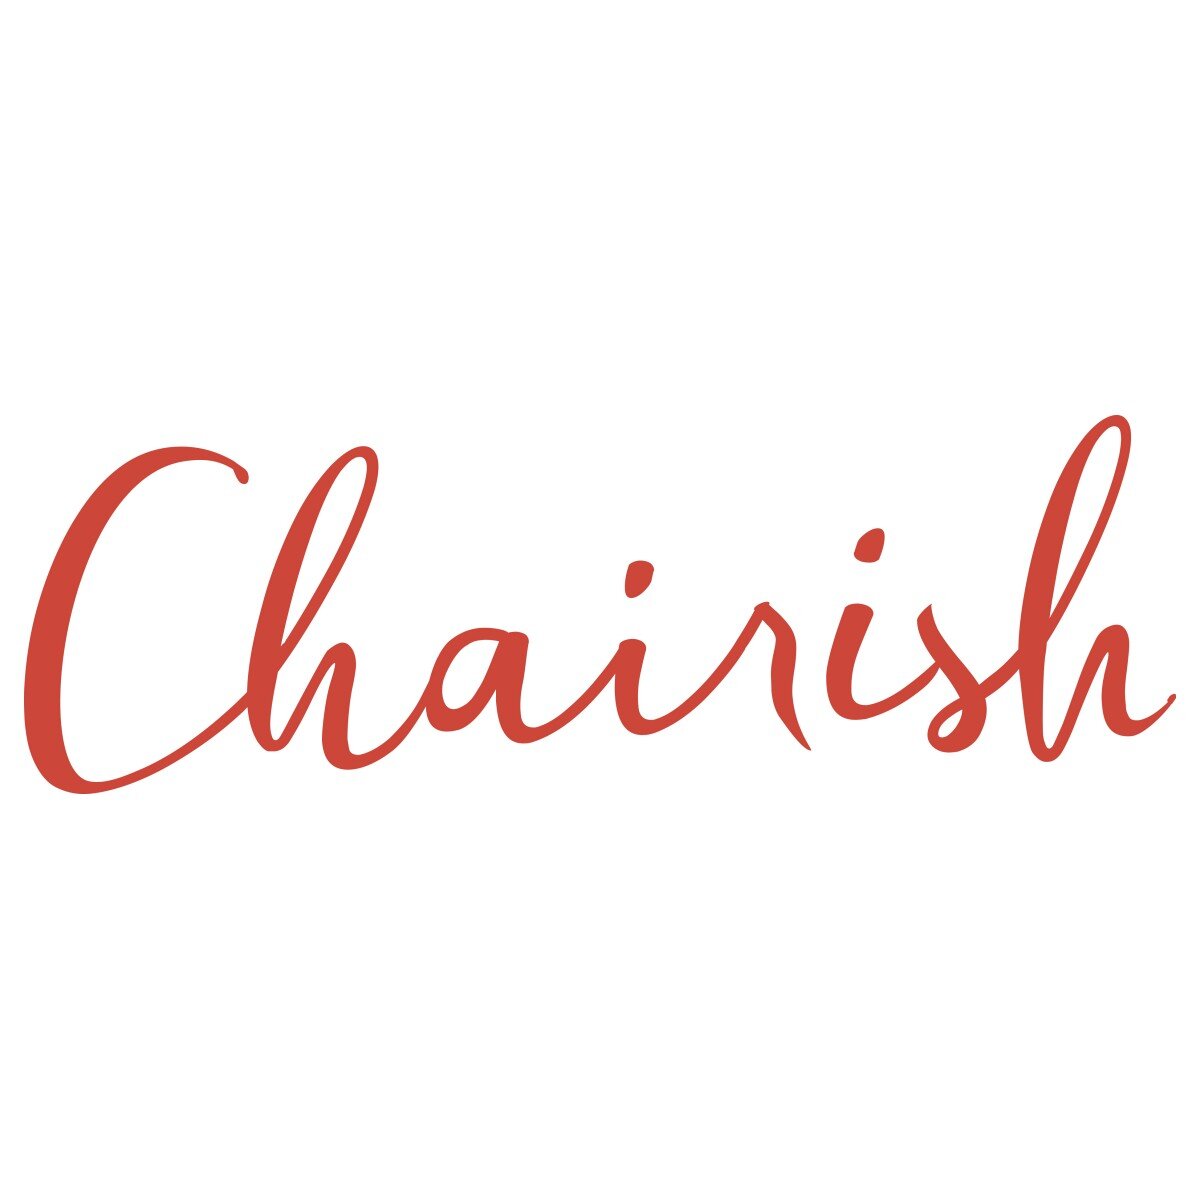 Chairish-Logo-1200x1200px.jpg